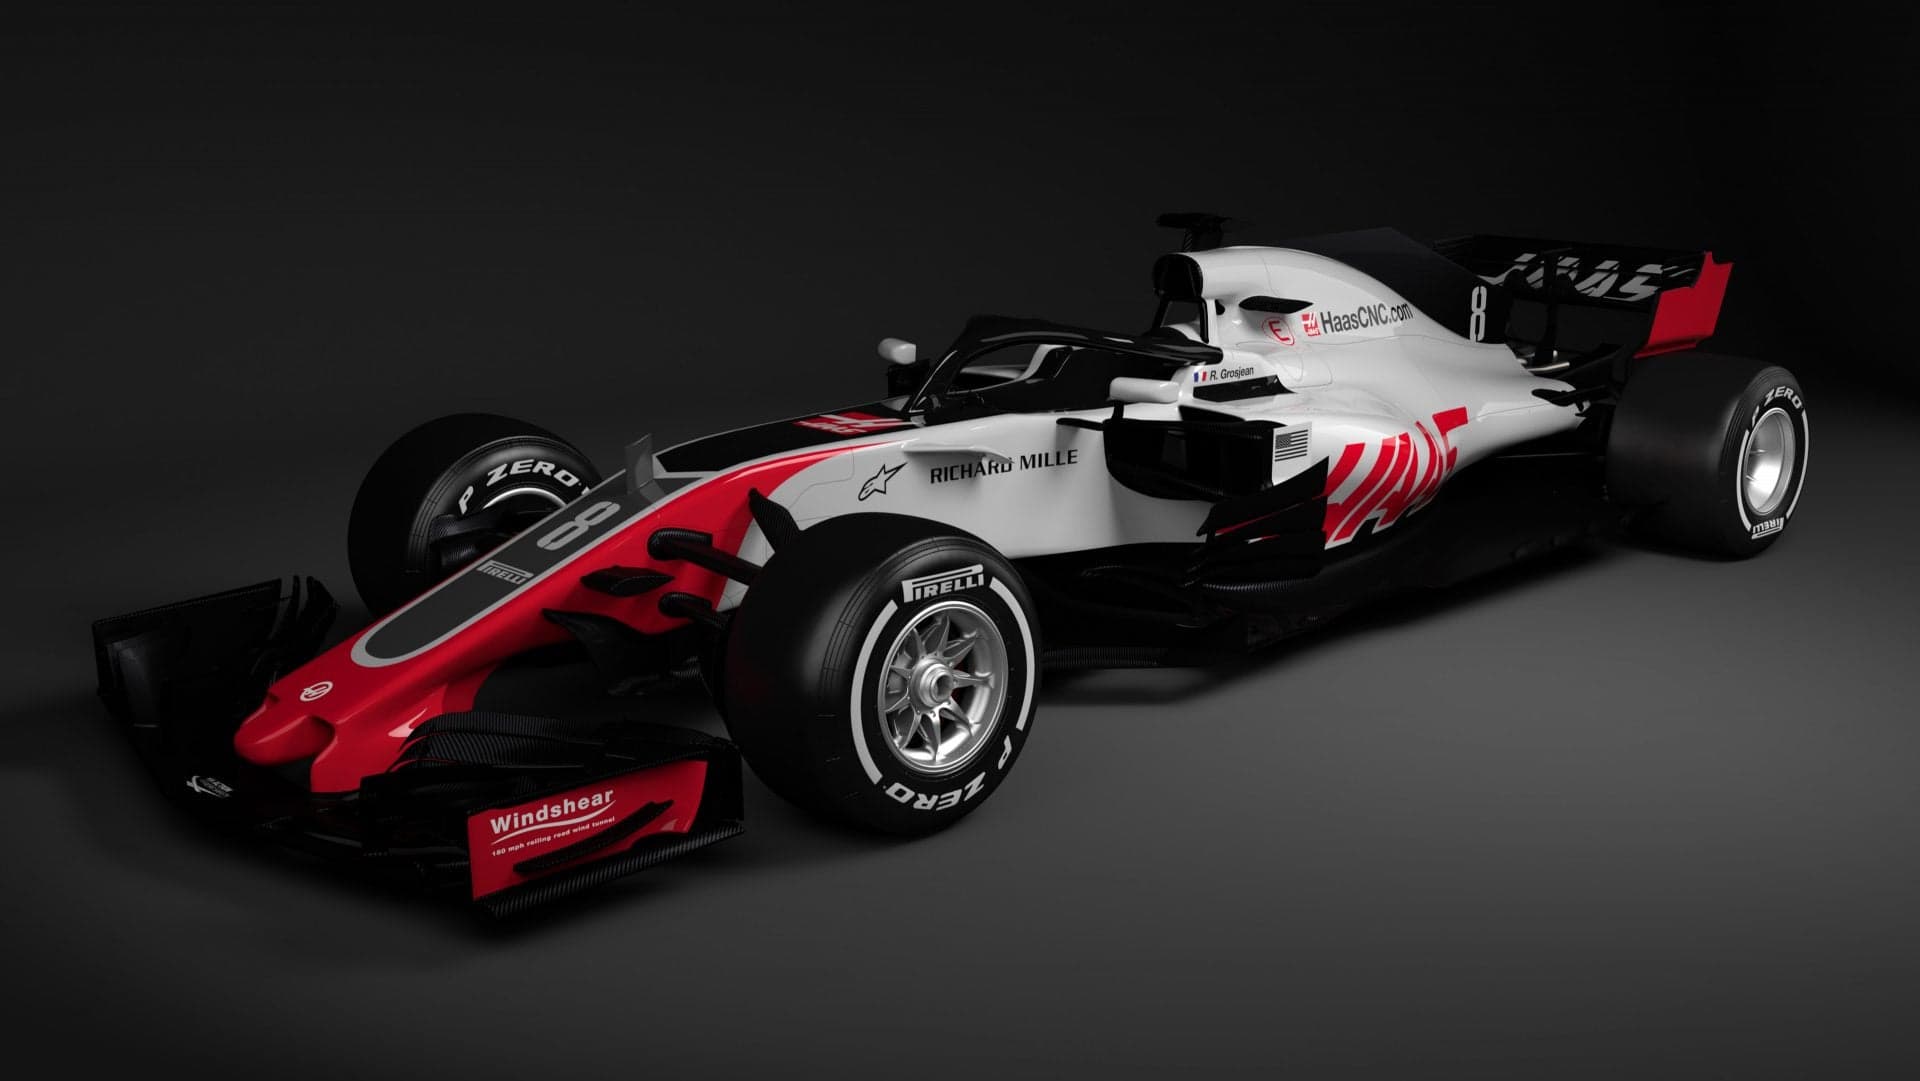 Haas VF-18 First 2018 F1 Car Revealed